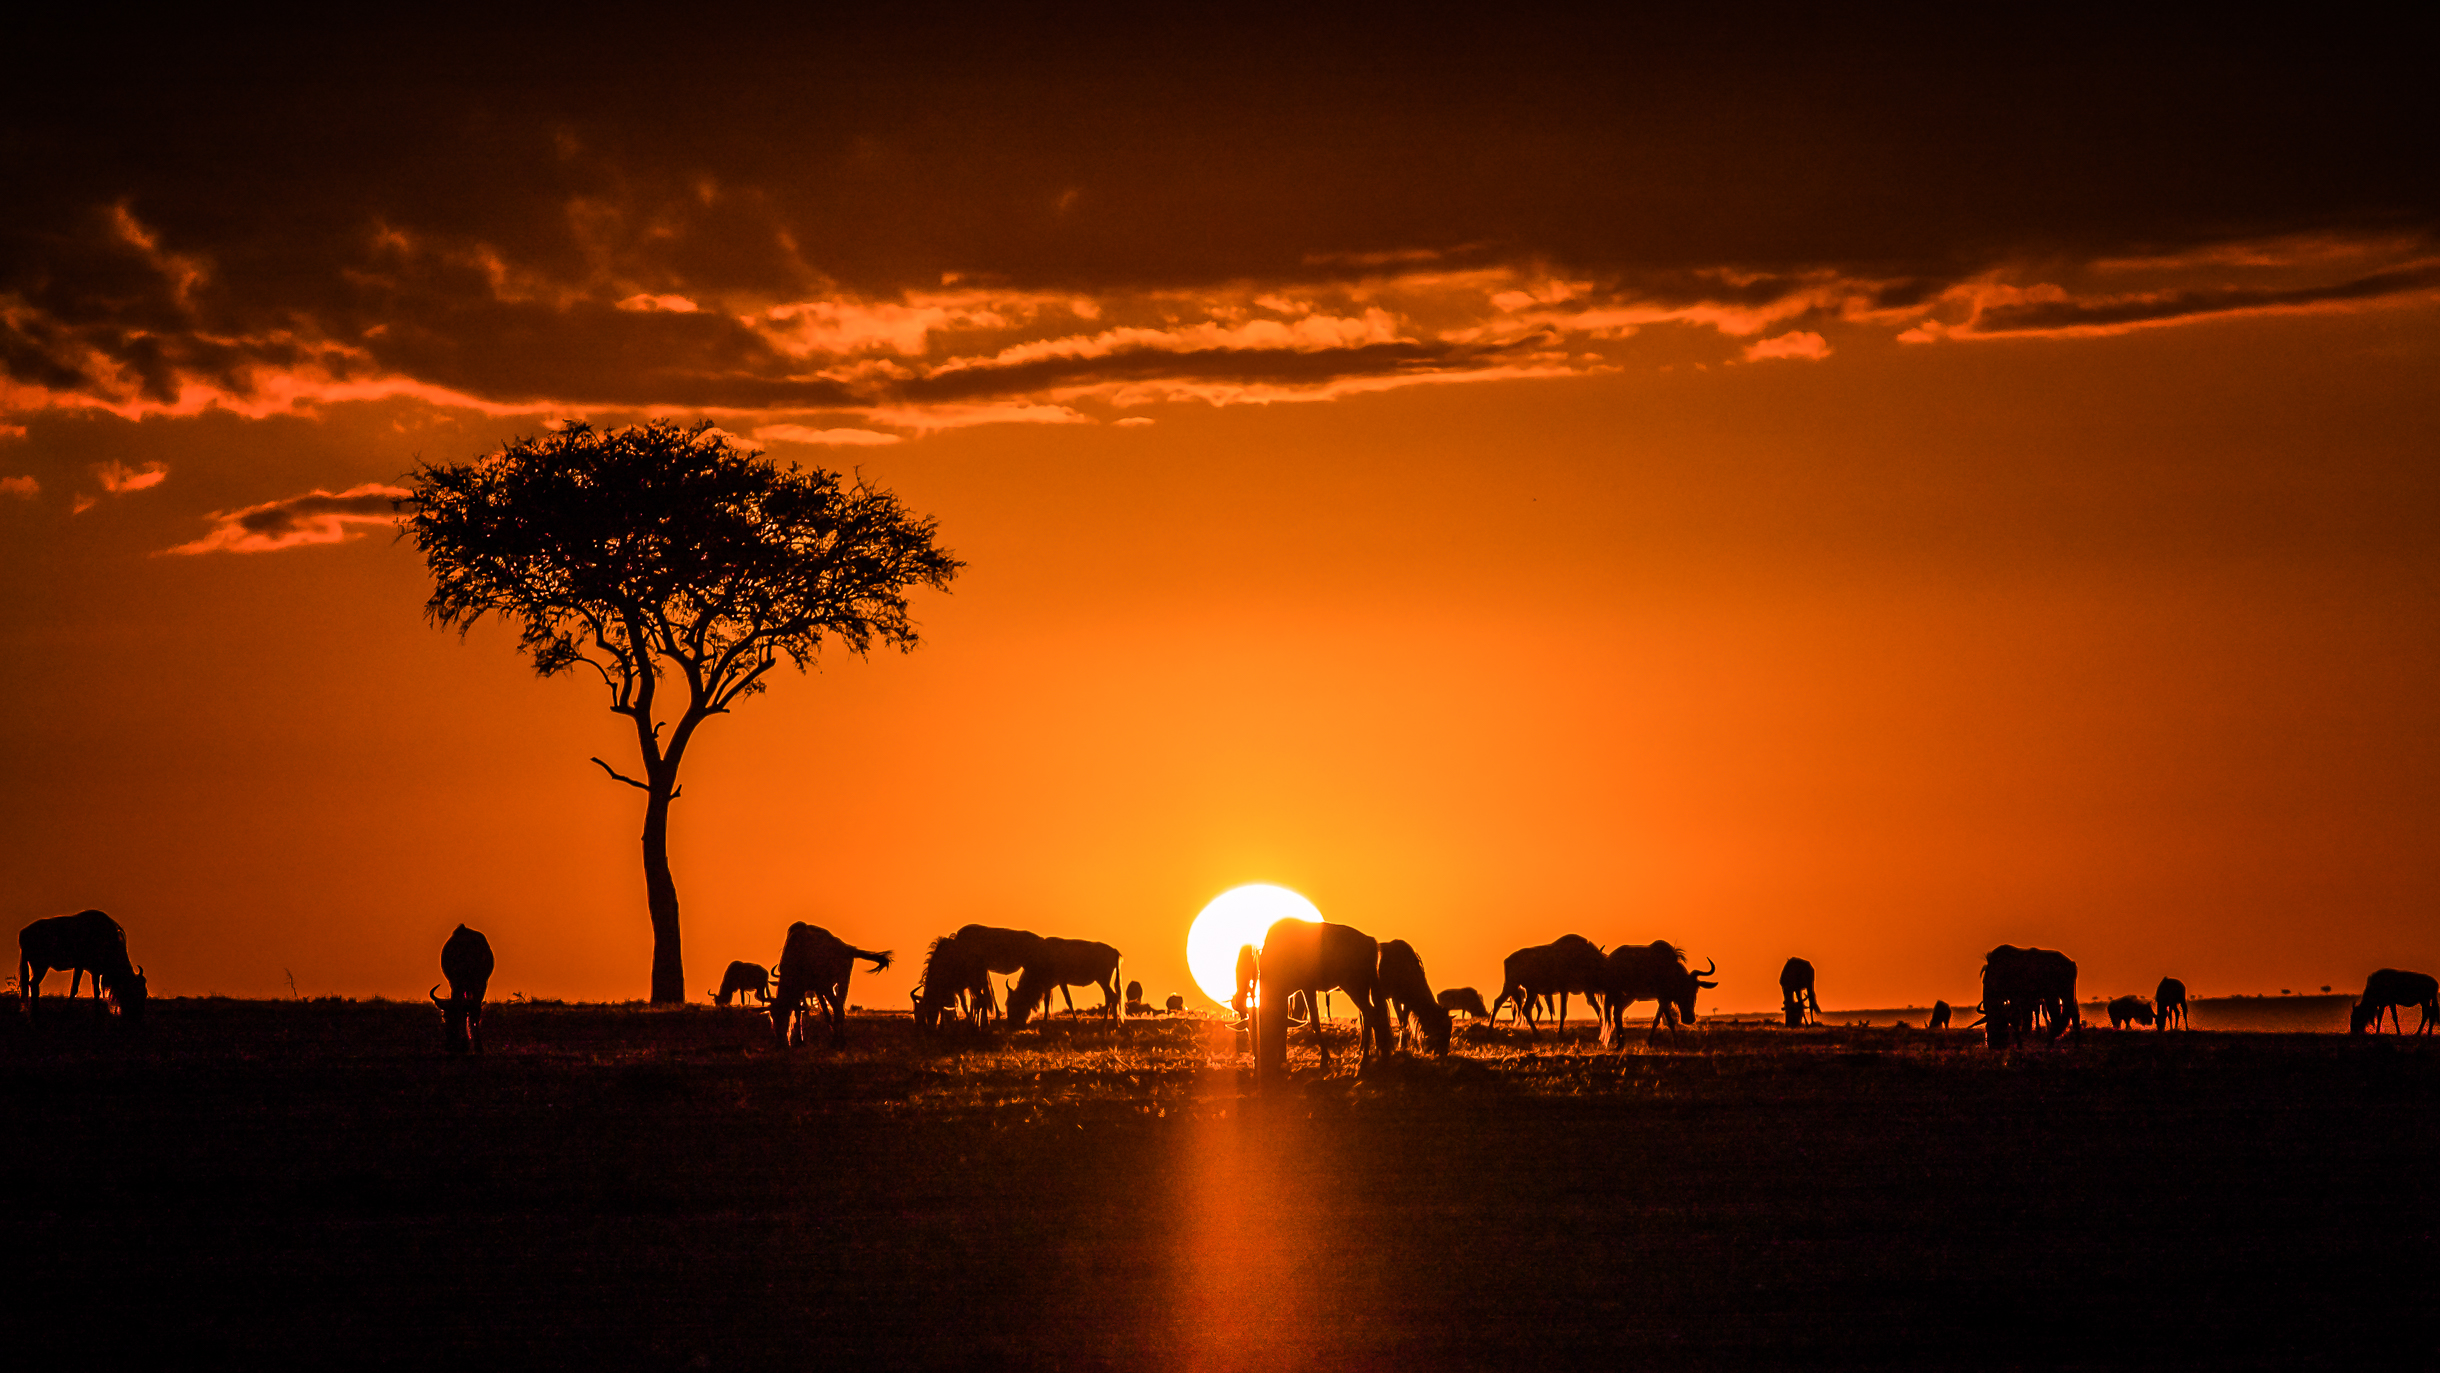 Sunrise in the Maasai Mara (Illustration) - Ancient History Encyclopedia